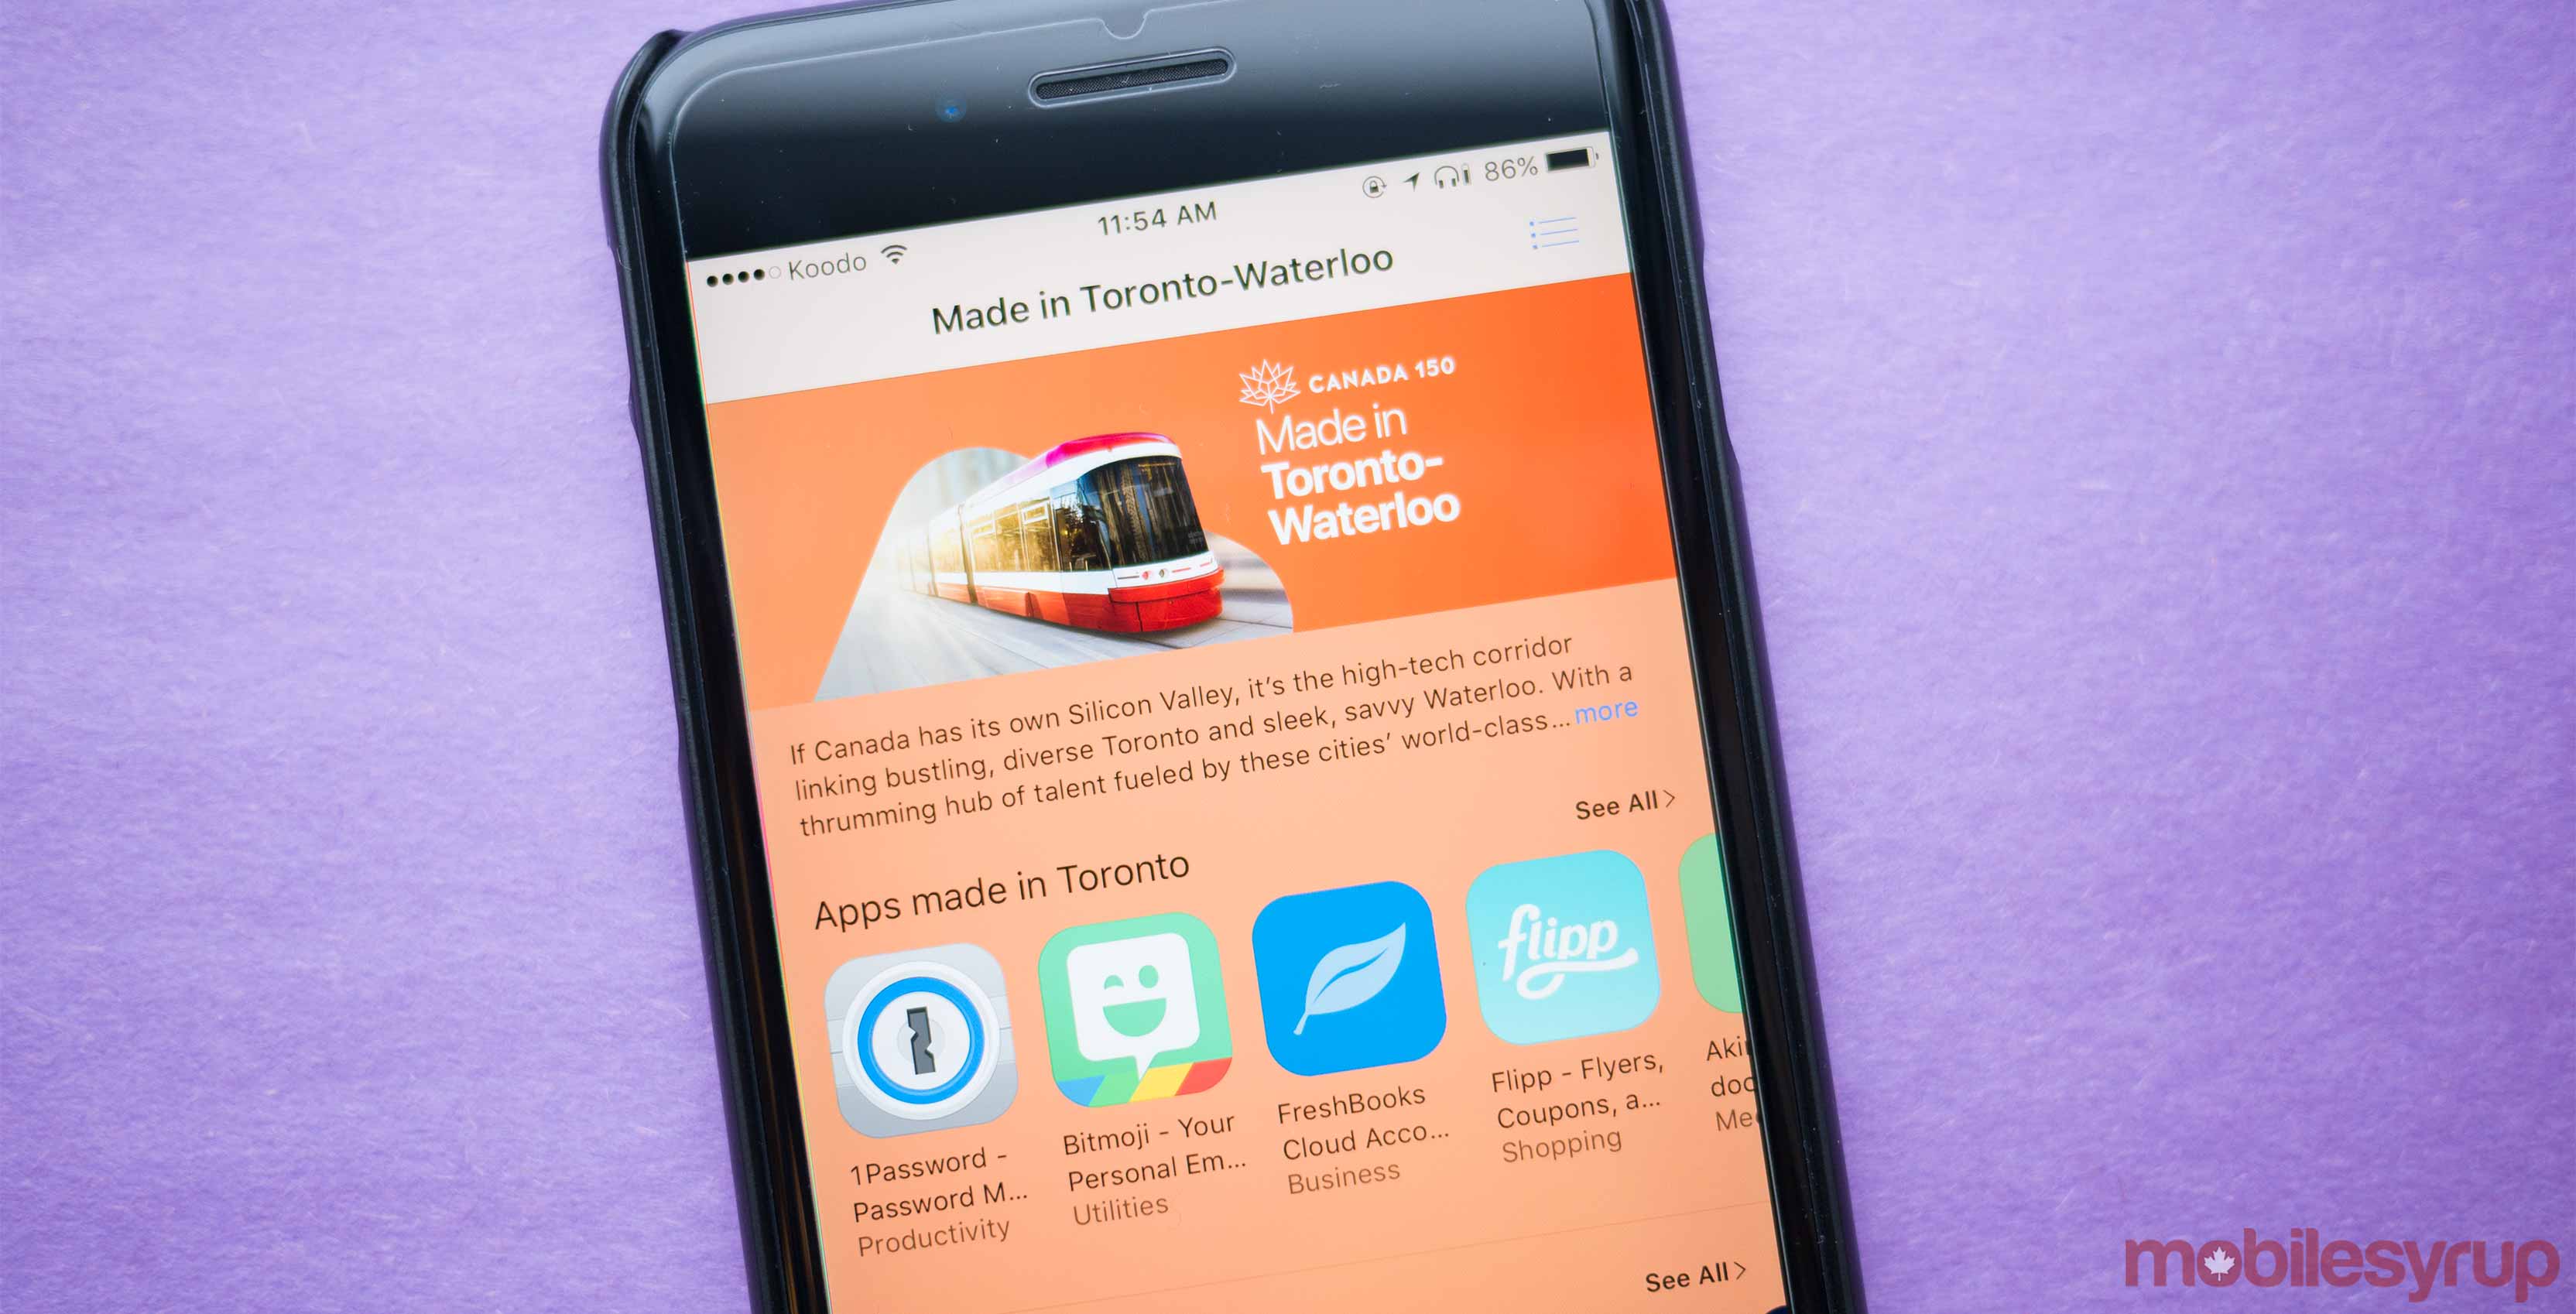 Toronto-Waterloo App Store